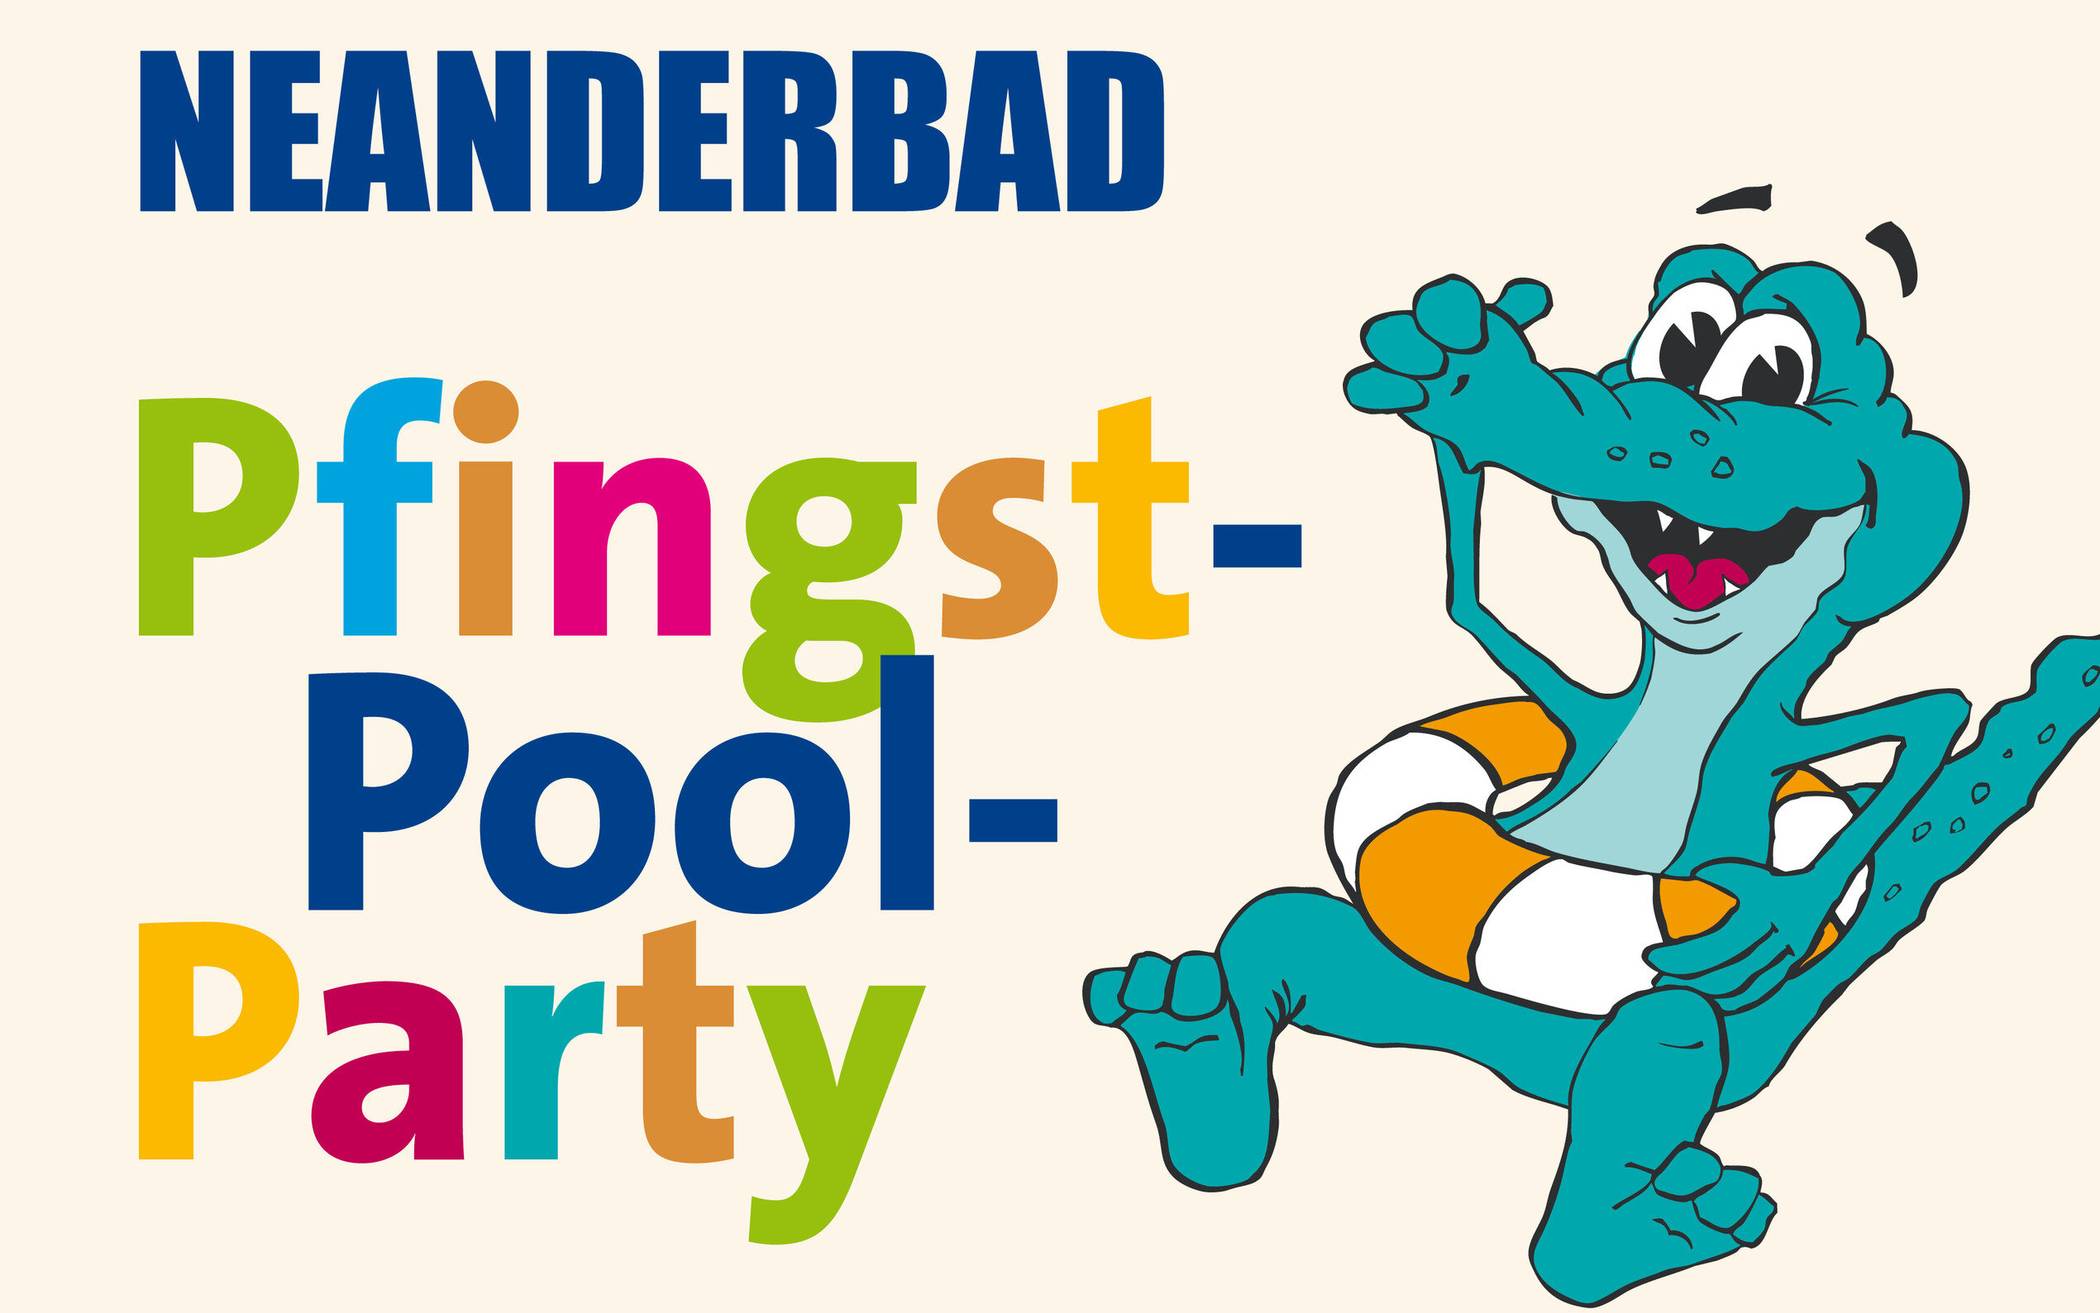 Pfingst-Pool-Party im Neanderbad am 18. Mai